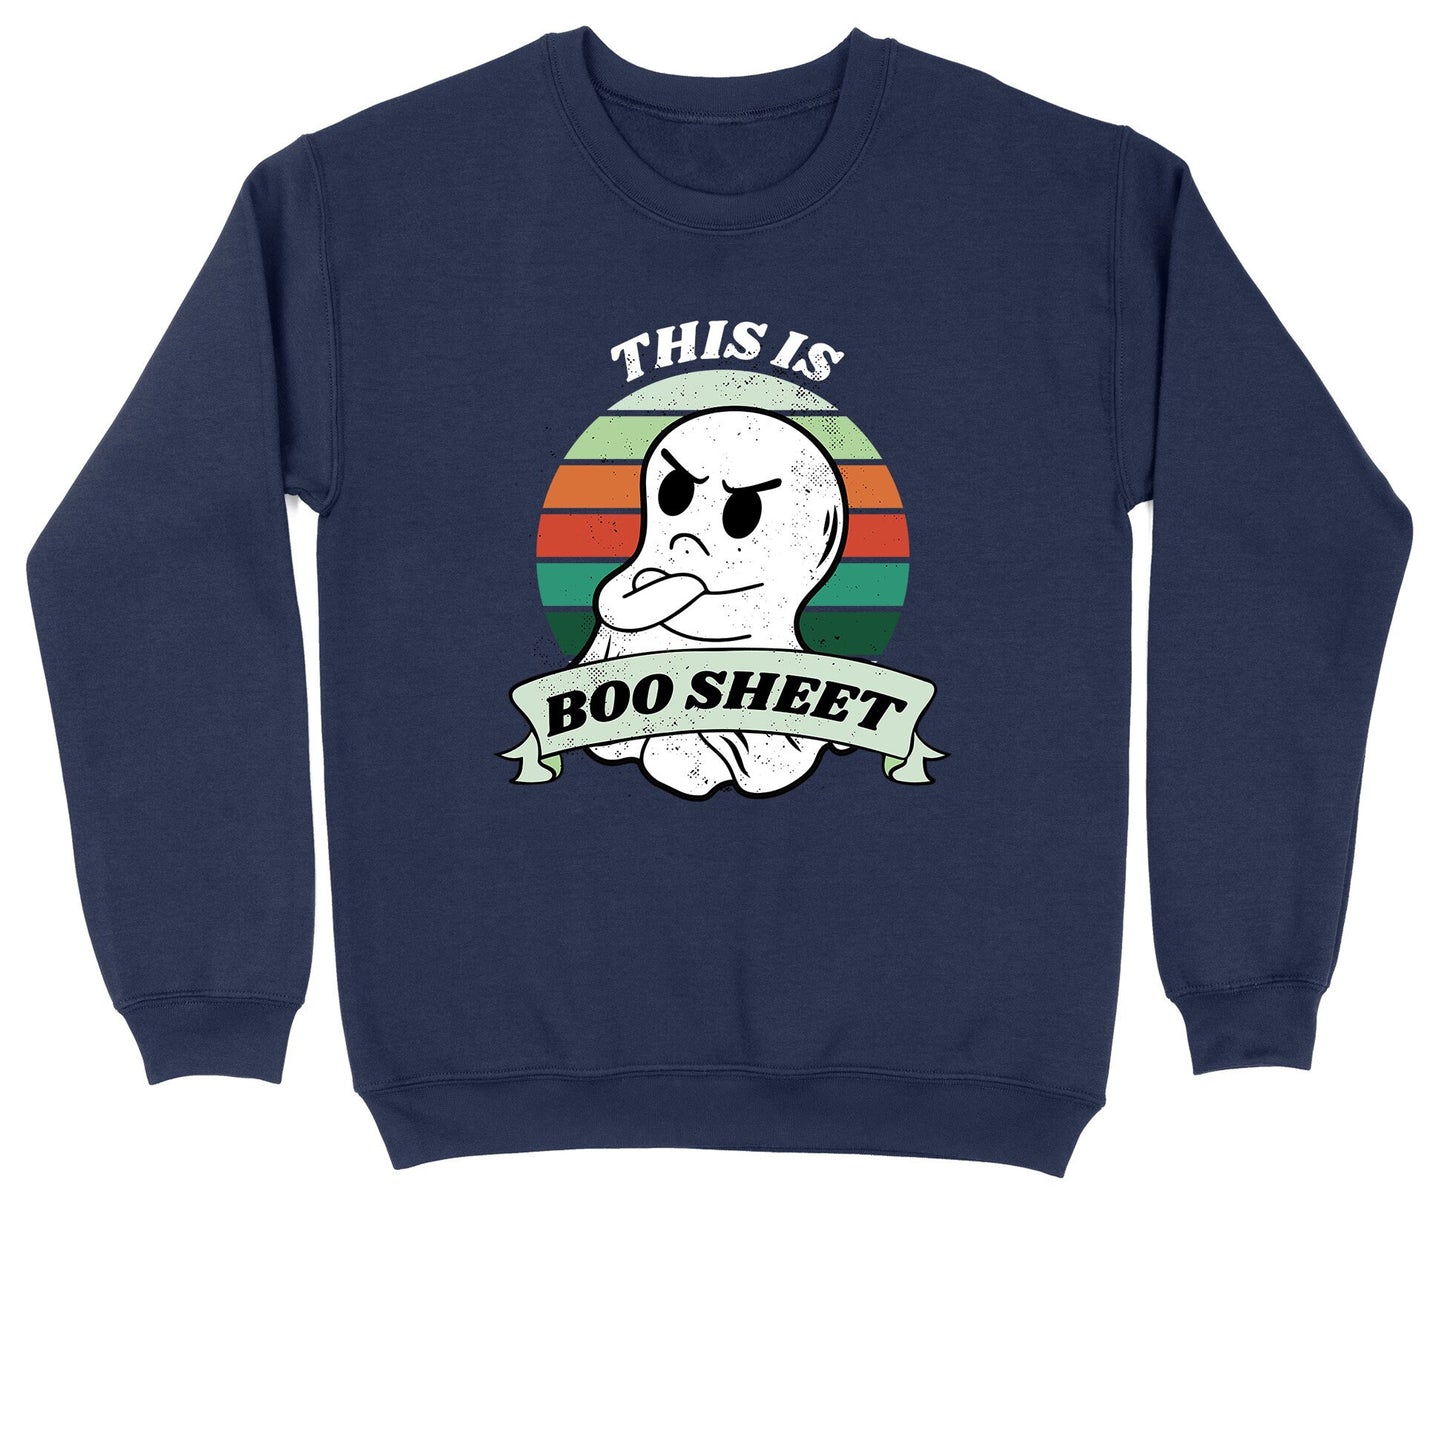 This is Boo Sheet | Crew Neck Sweatshirt | Big & Tall | Mens and Ladies | Halloween Shirt | Halloween Costume | Trick or Treat